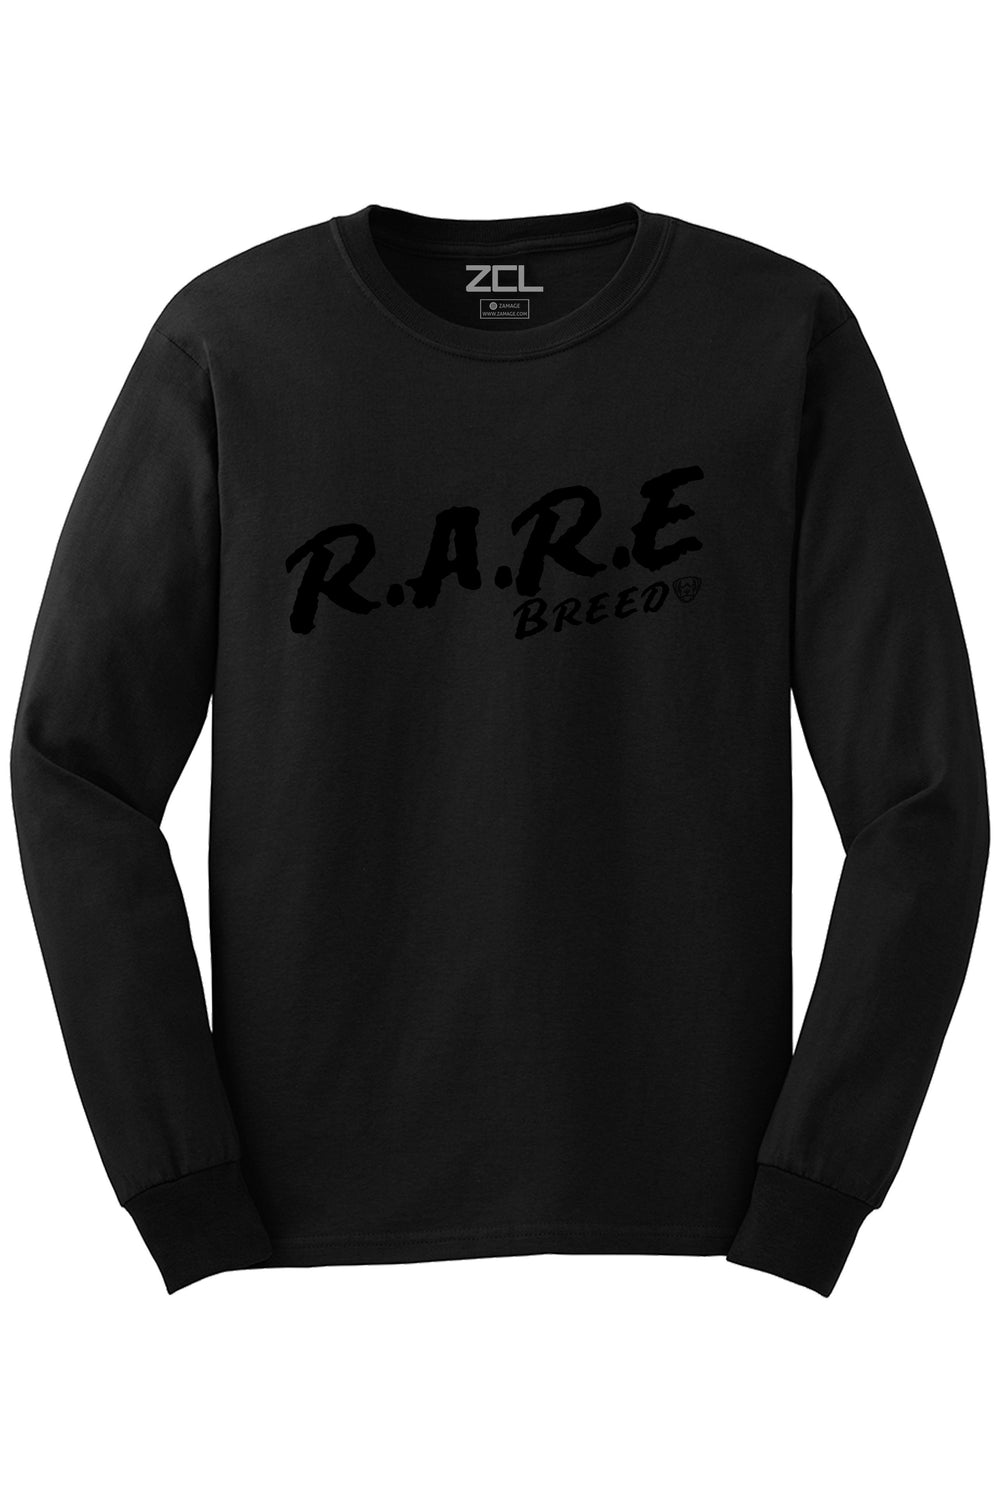 Rare Breed Long Sleeve Tee (Black Logo) - Zamage